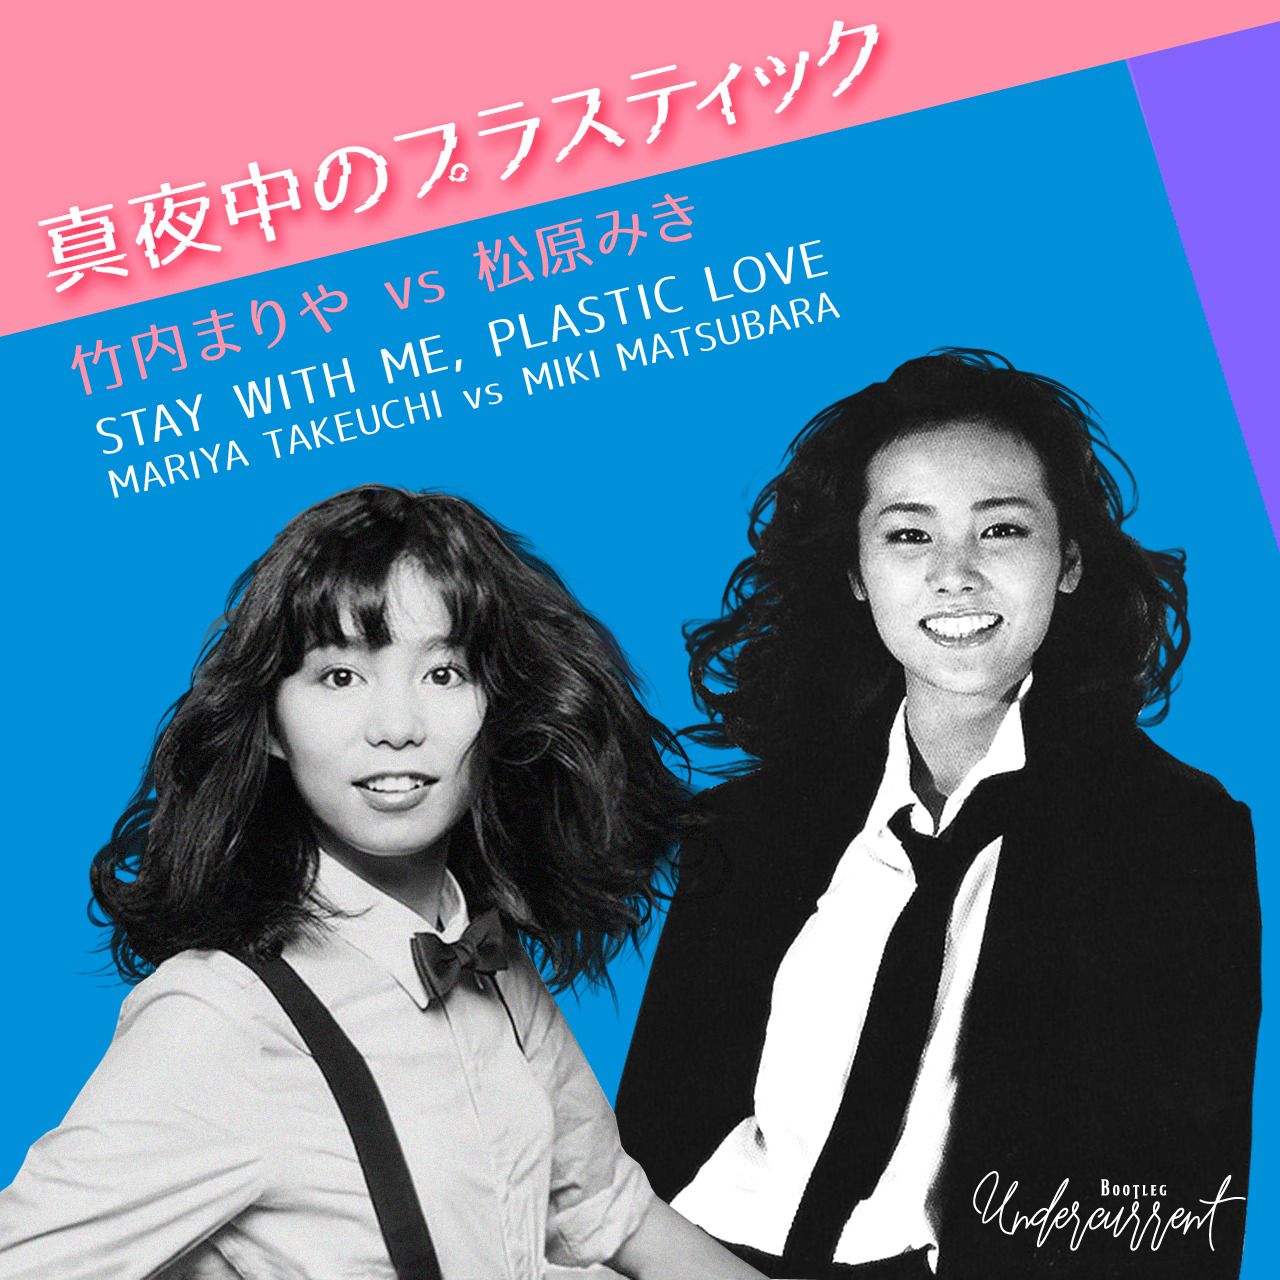 Mariya Takeuchi vs. Miki Matsubara with Me, Plastic Love